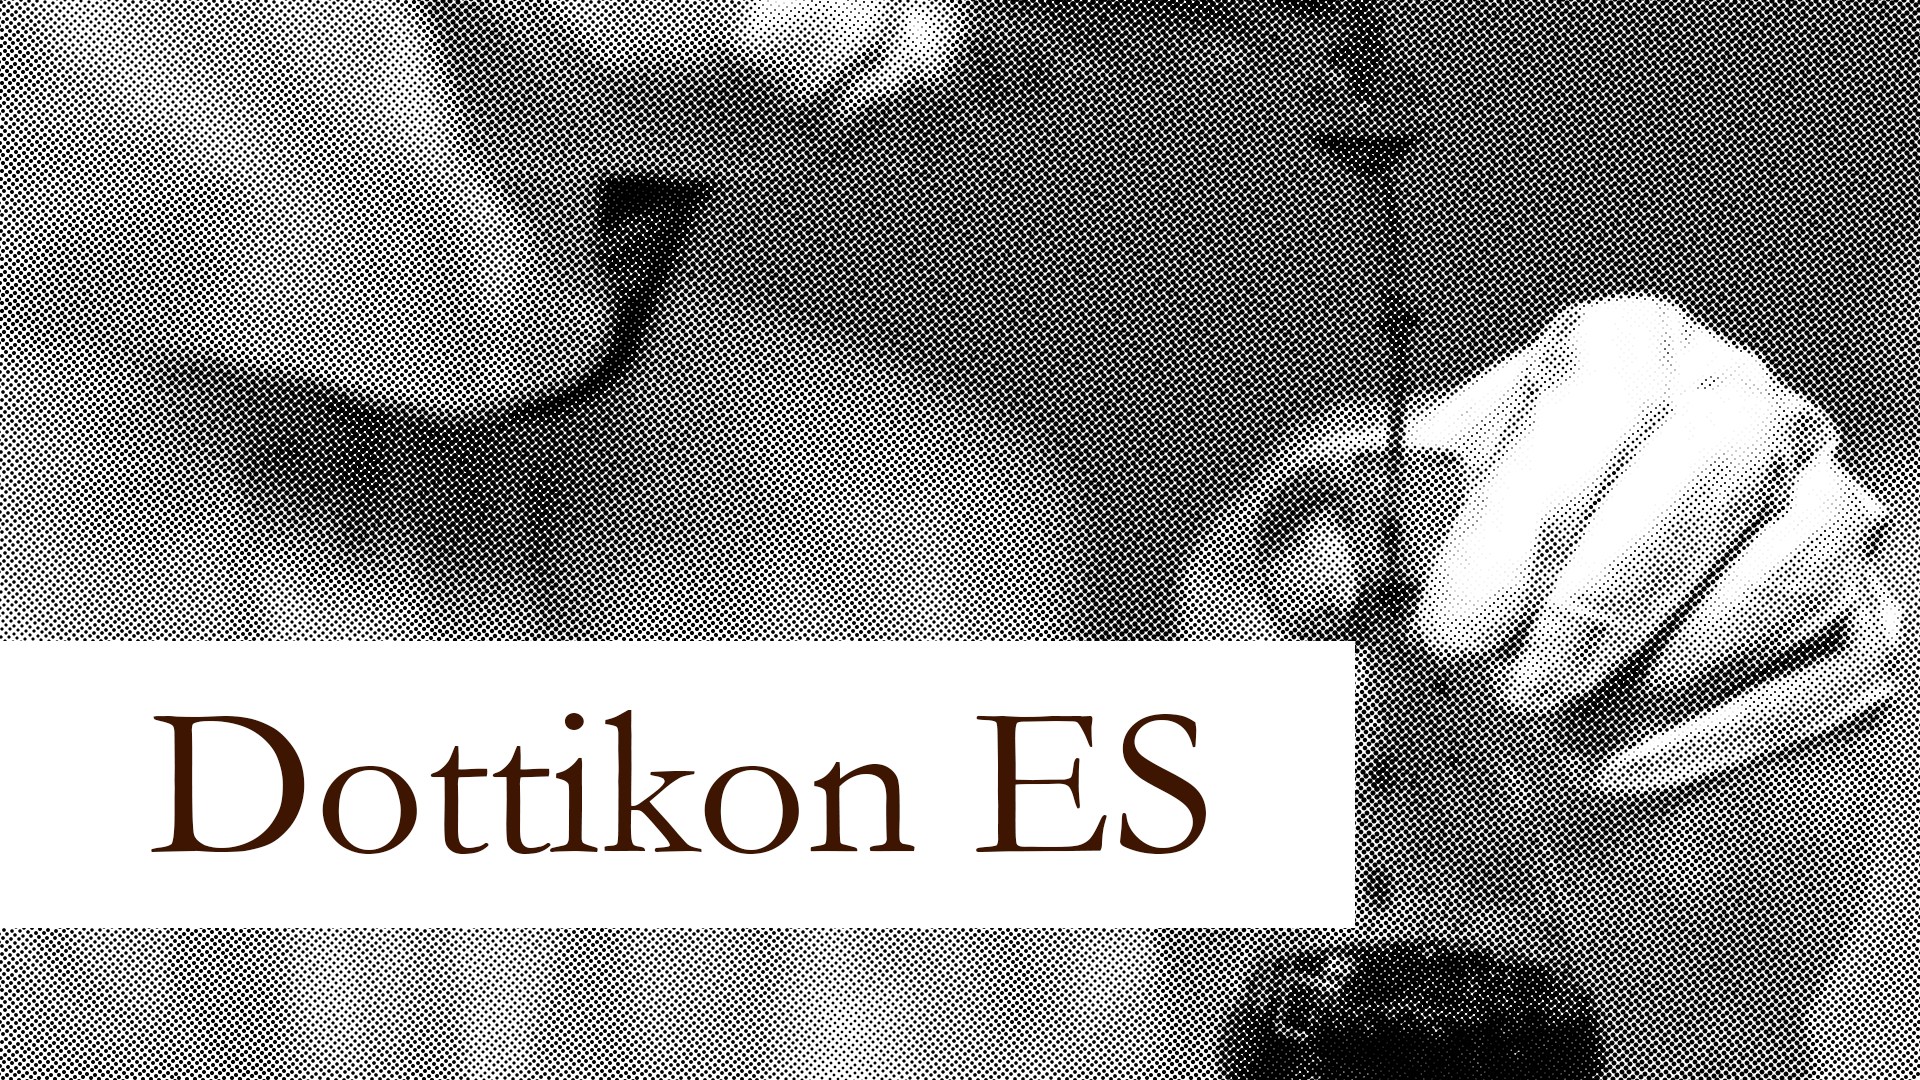 Dottikon ES: Hazardous chemicals with a good 360° View